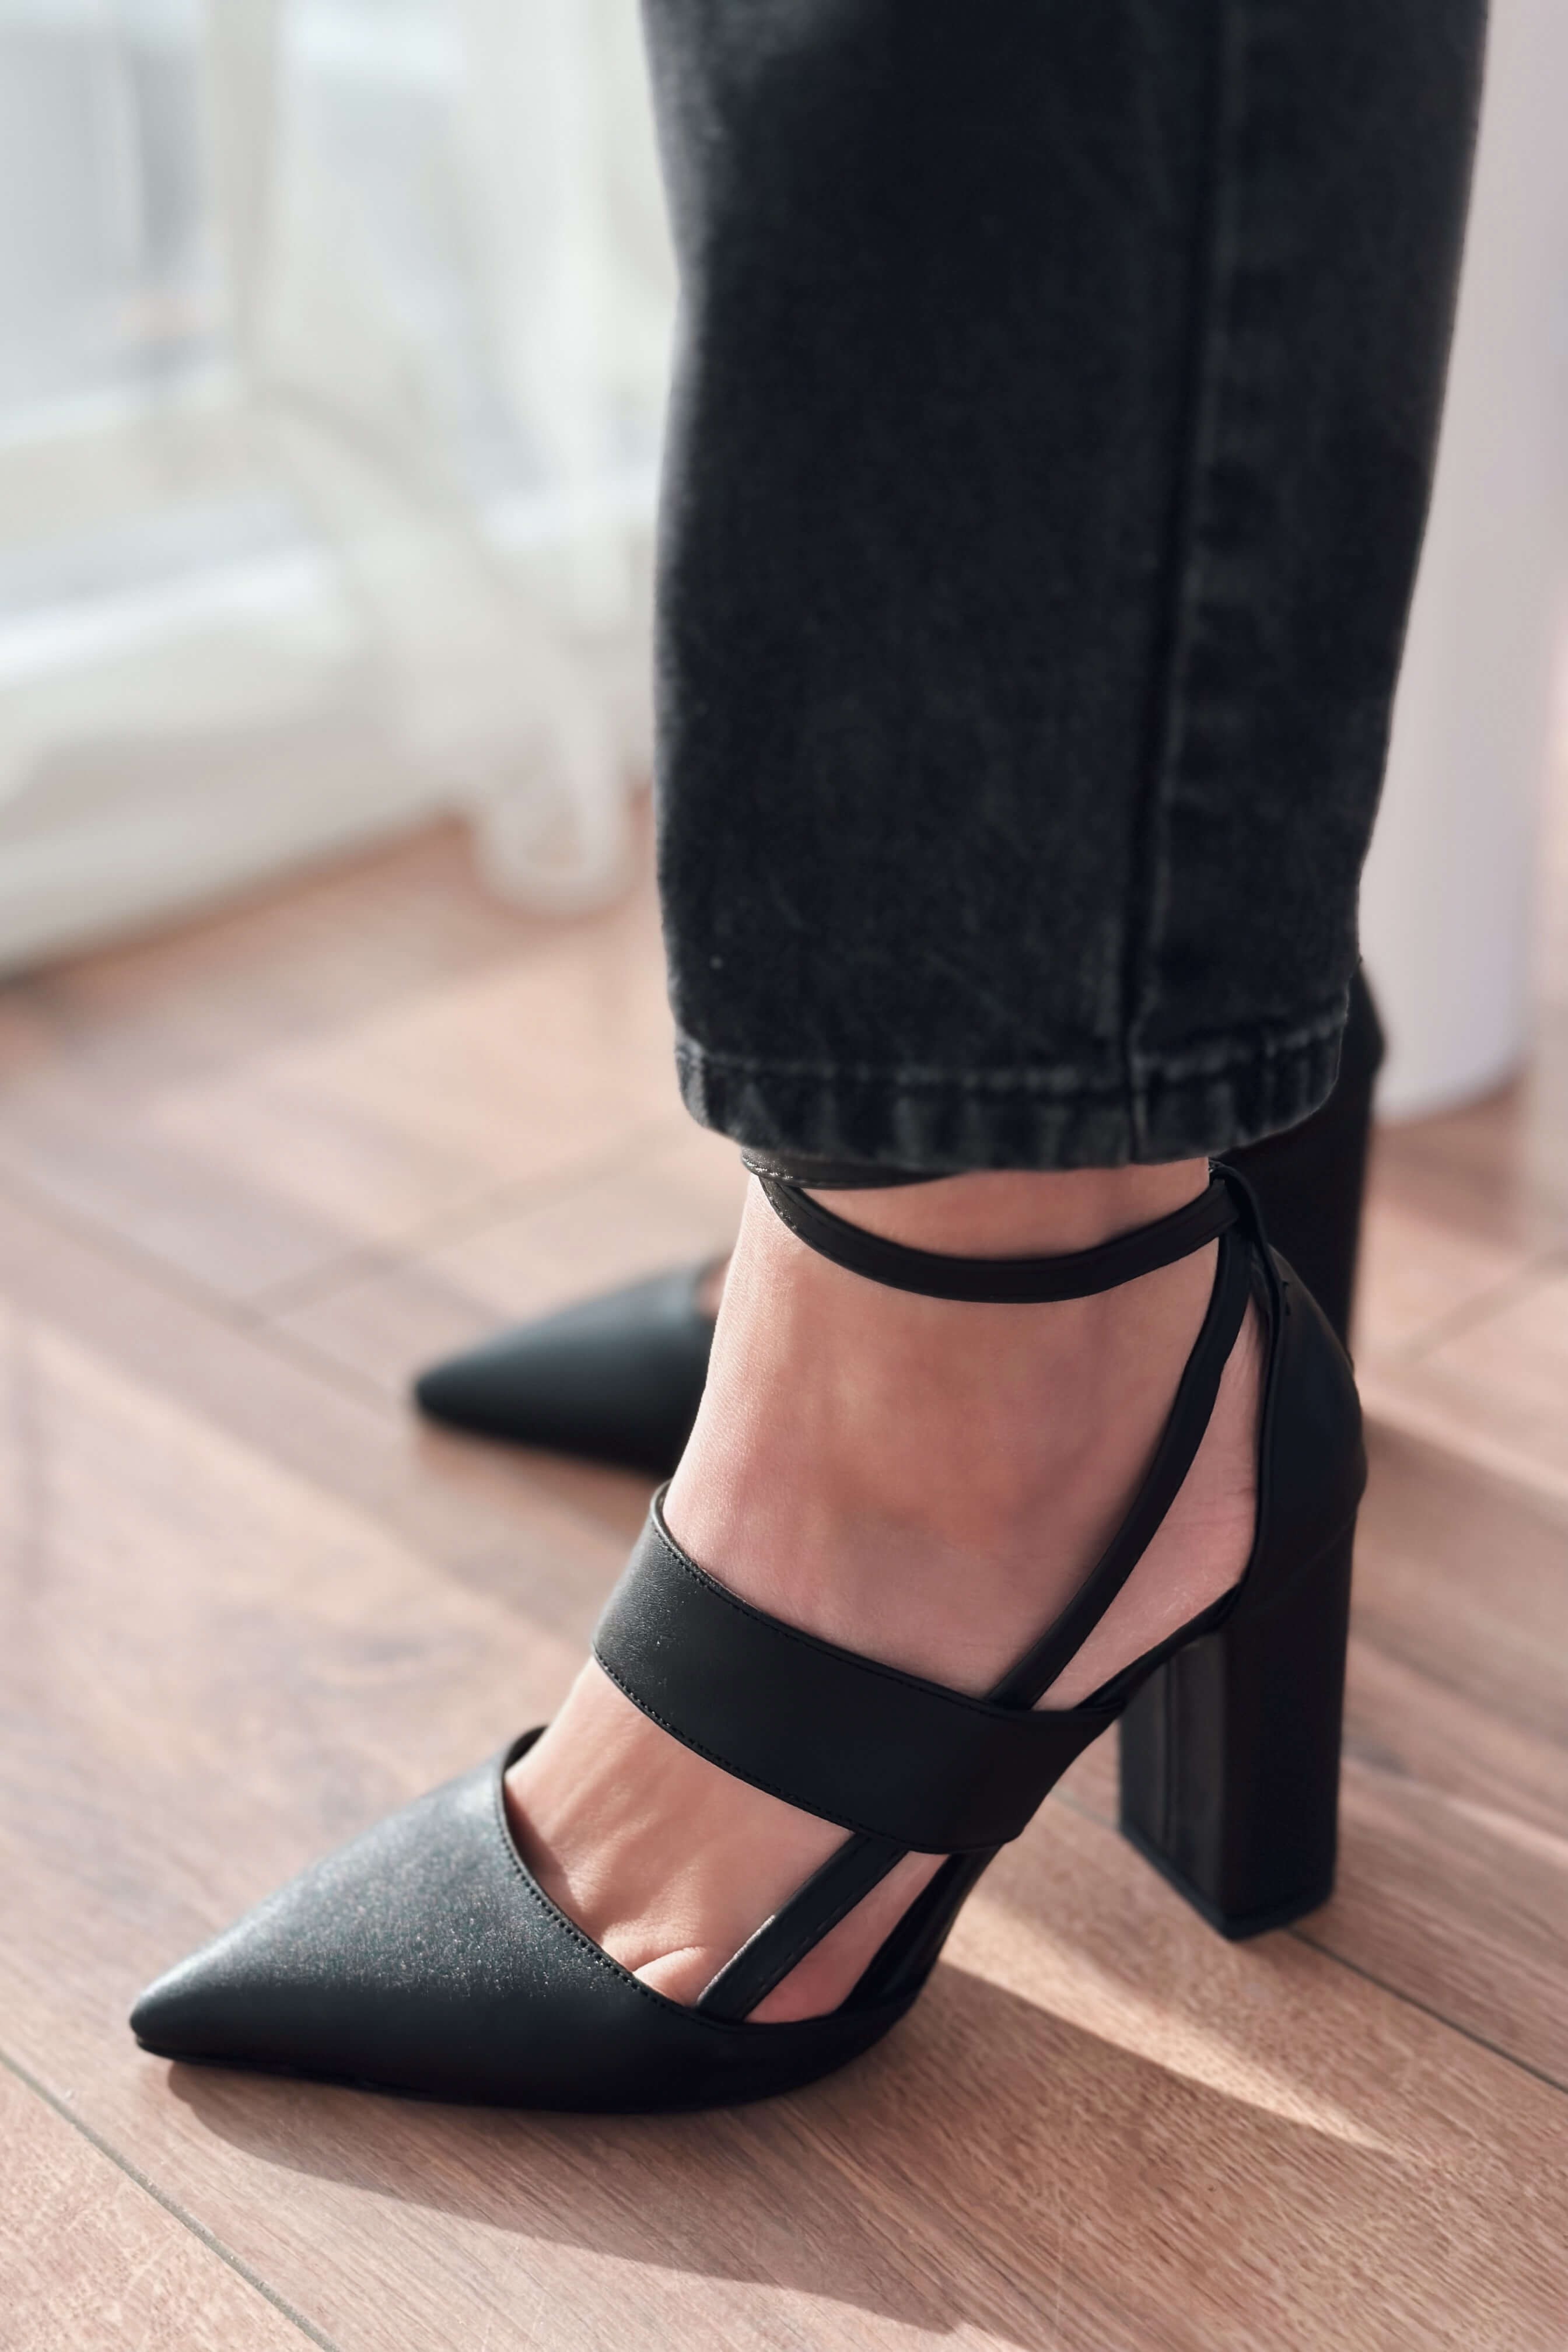 Lucia matte leather high heels woman stiletto black